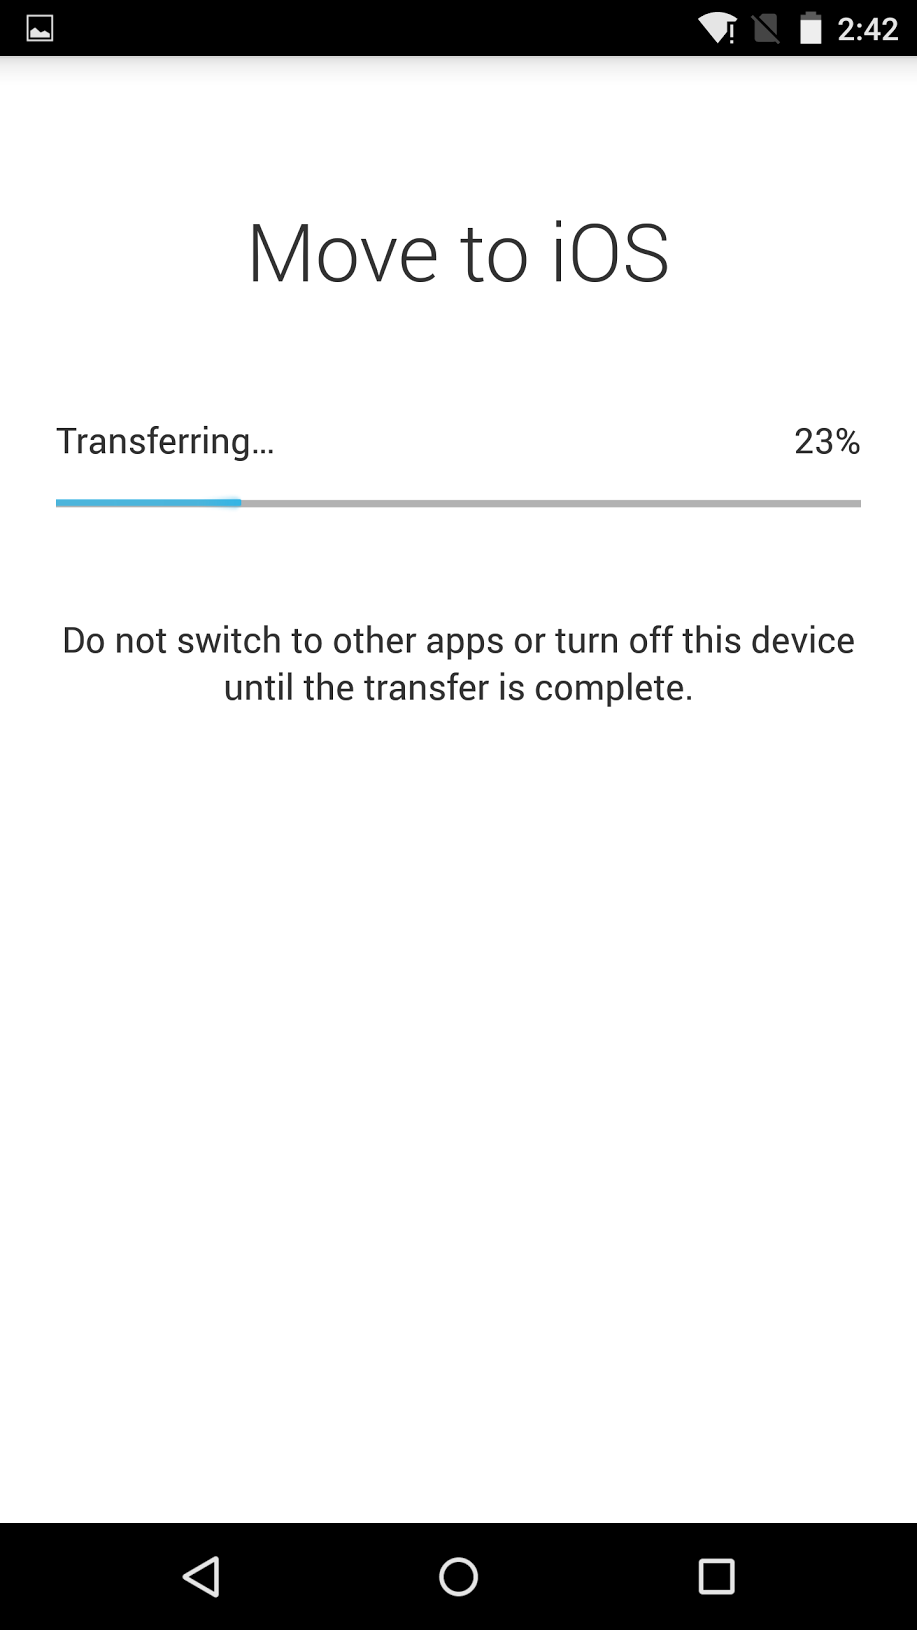 Move to iOS transferring